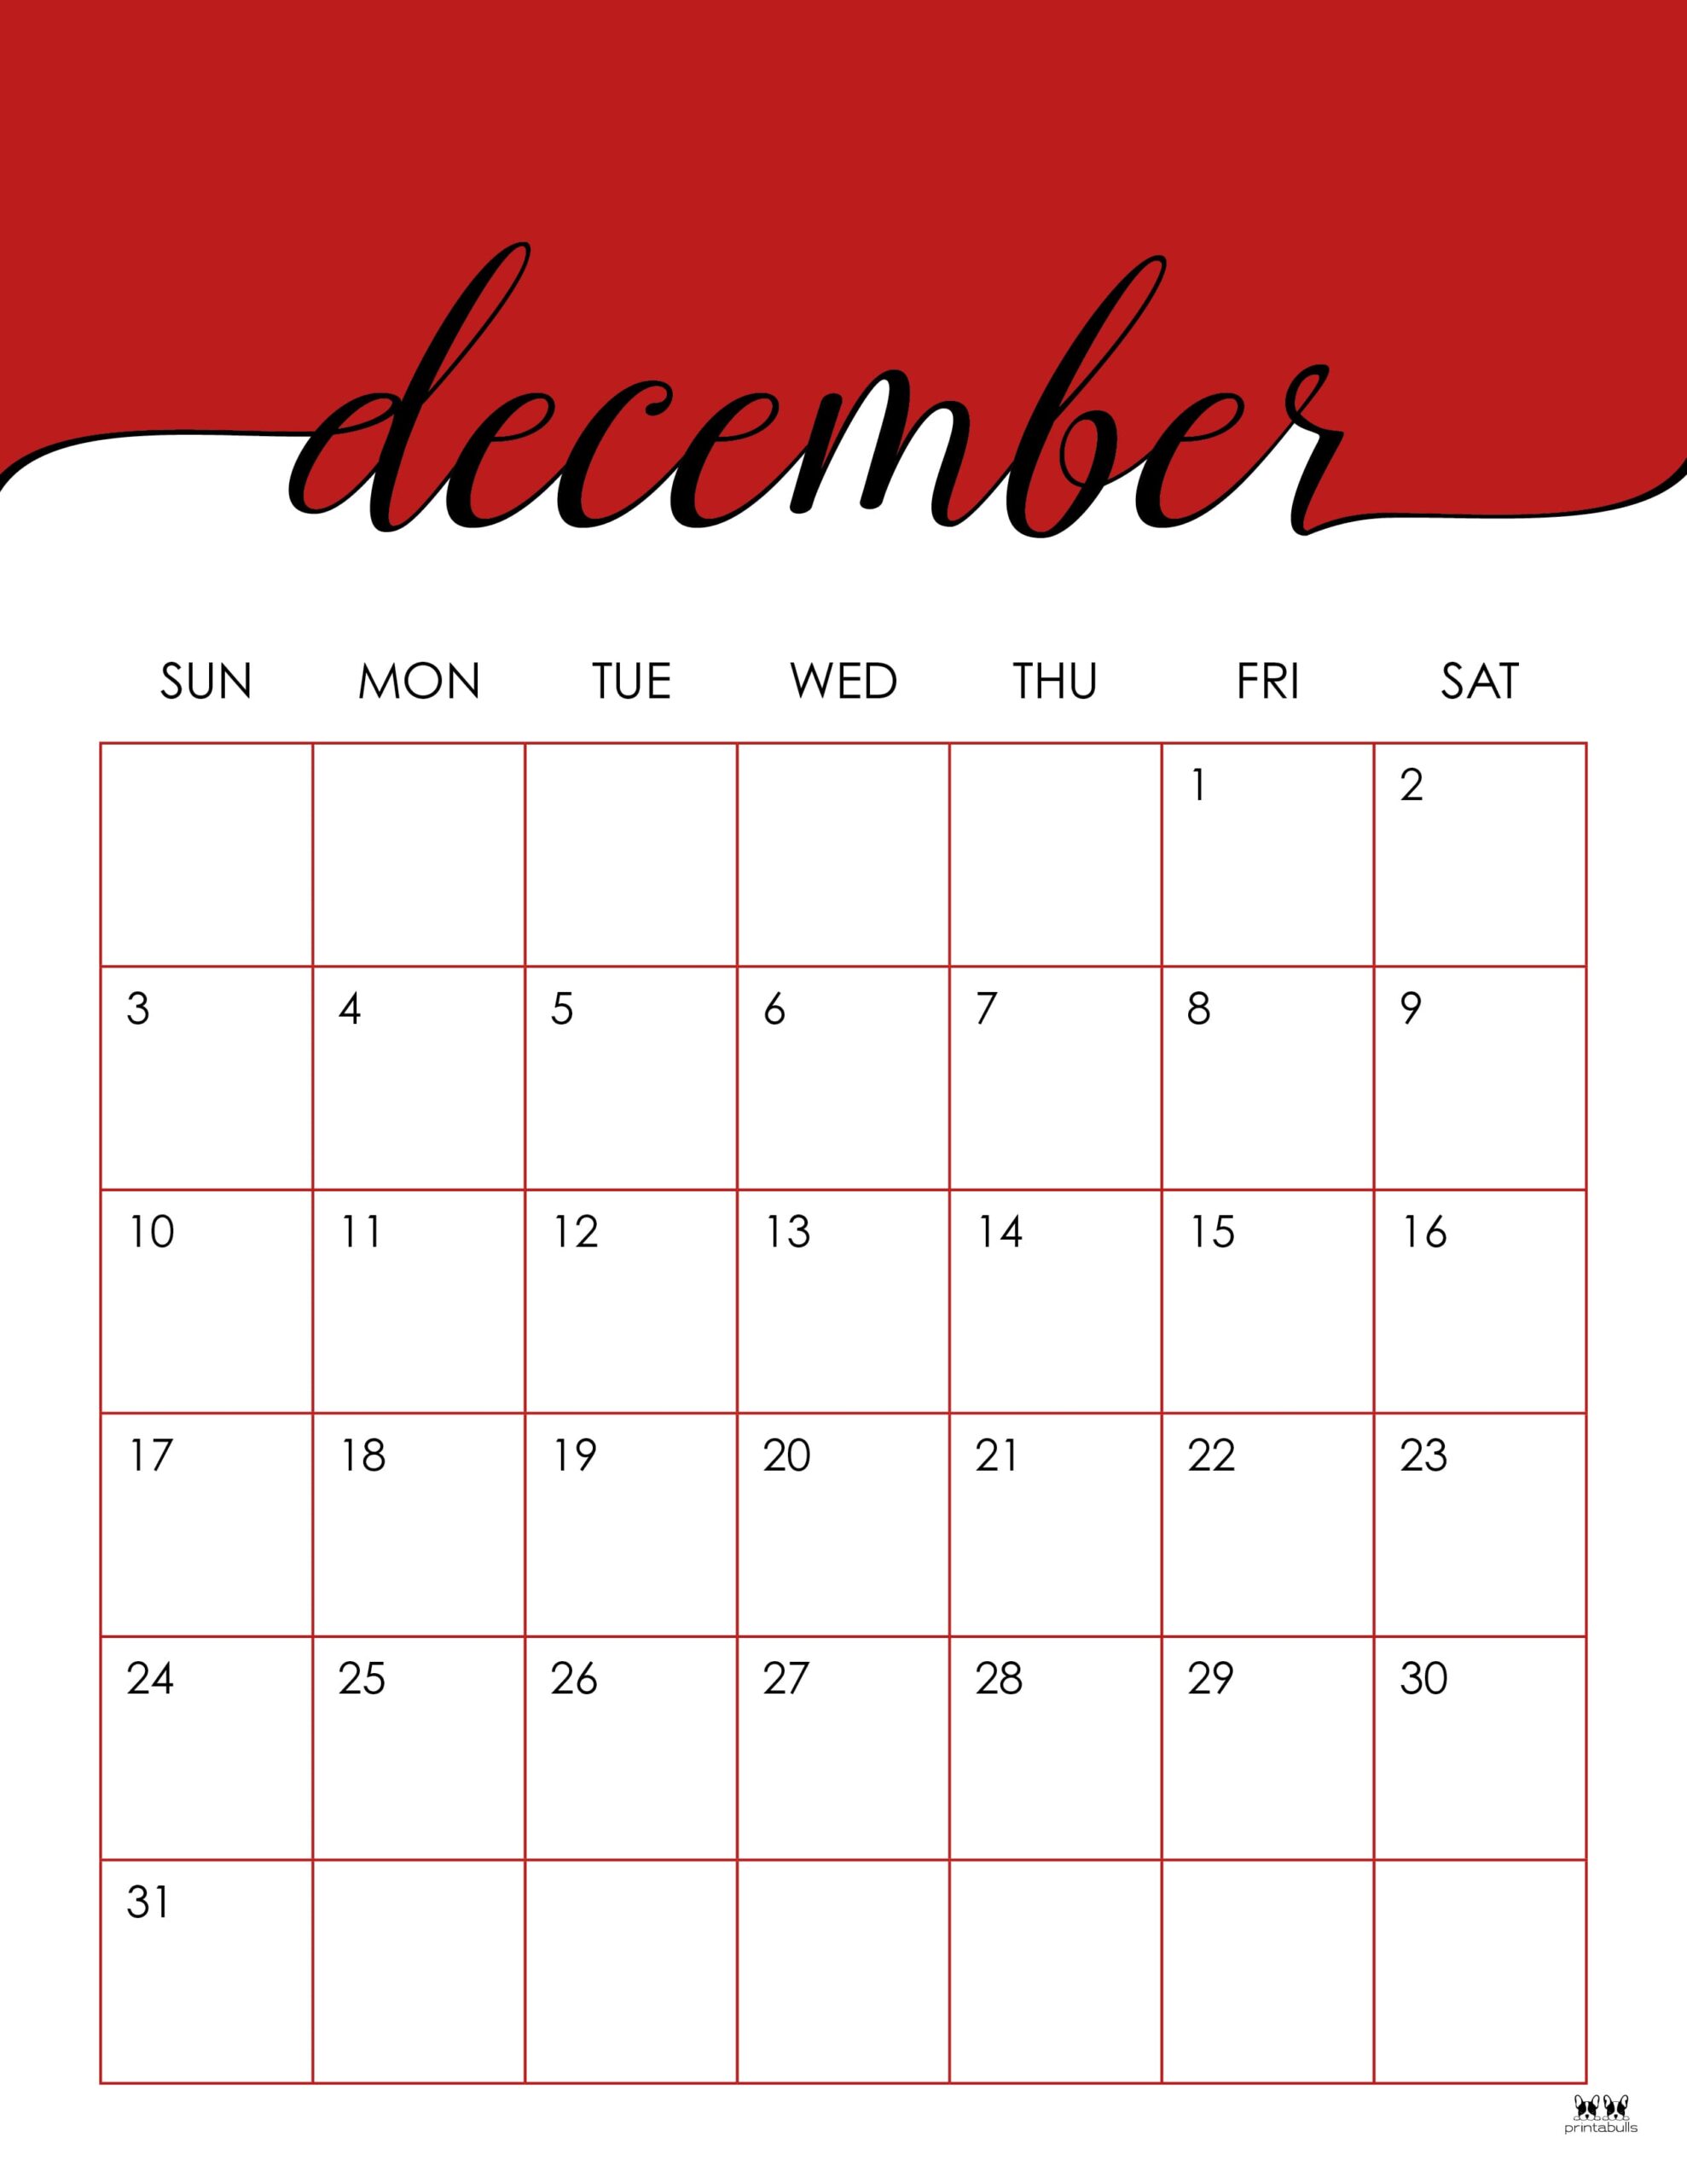 December 2023 Calendars - 50 FREE Printables | Printabulls